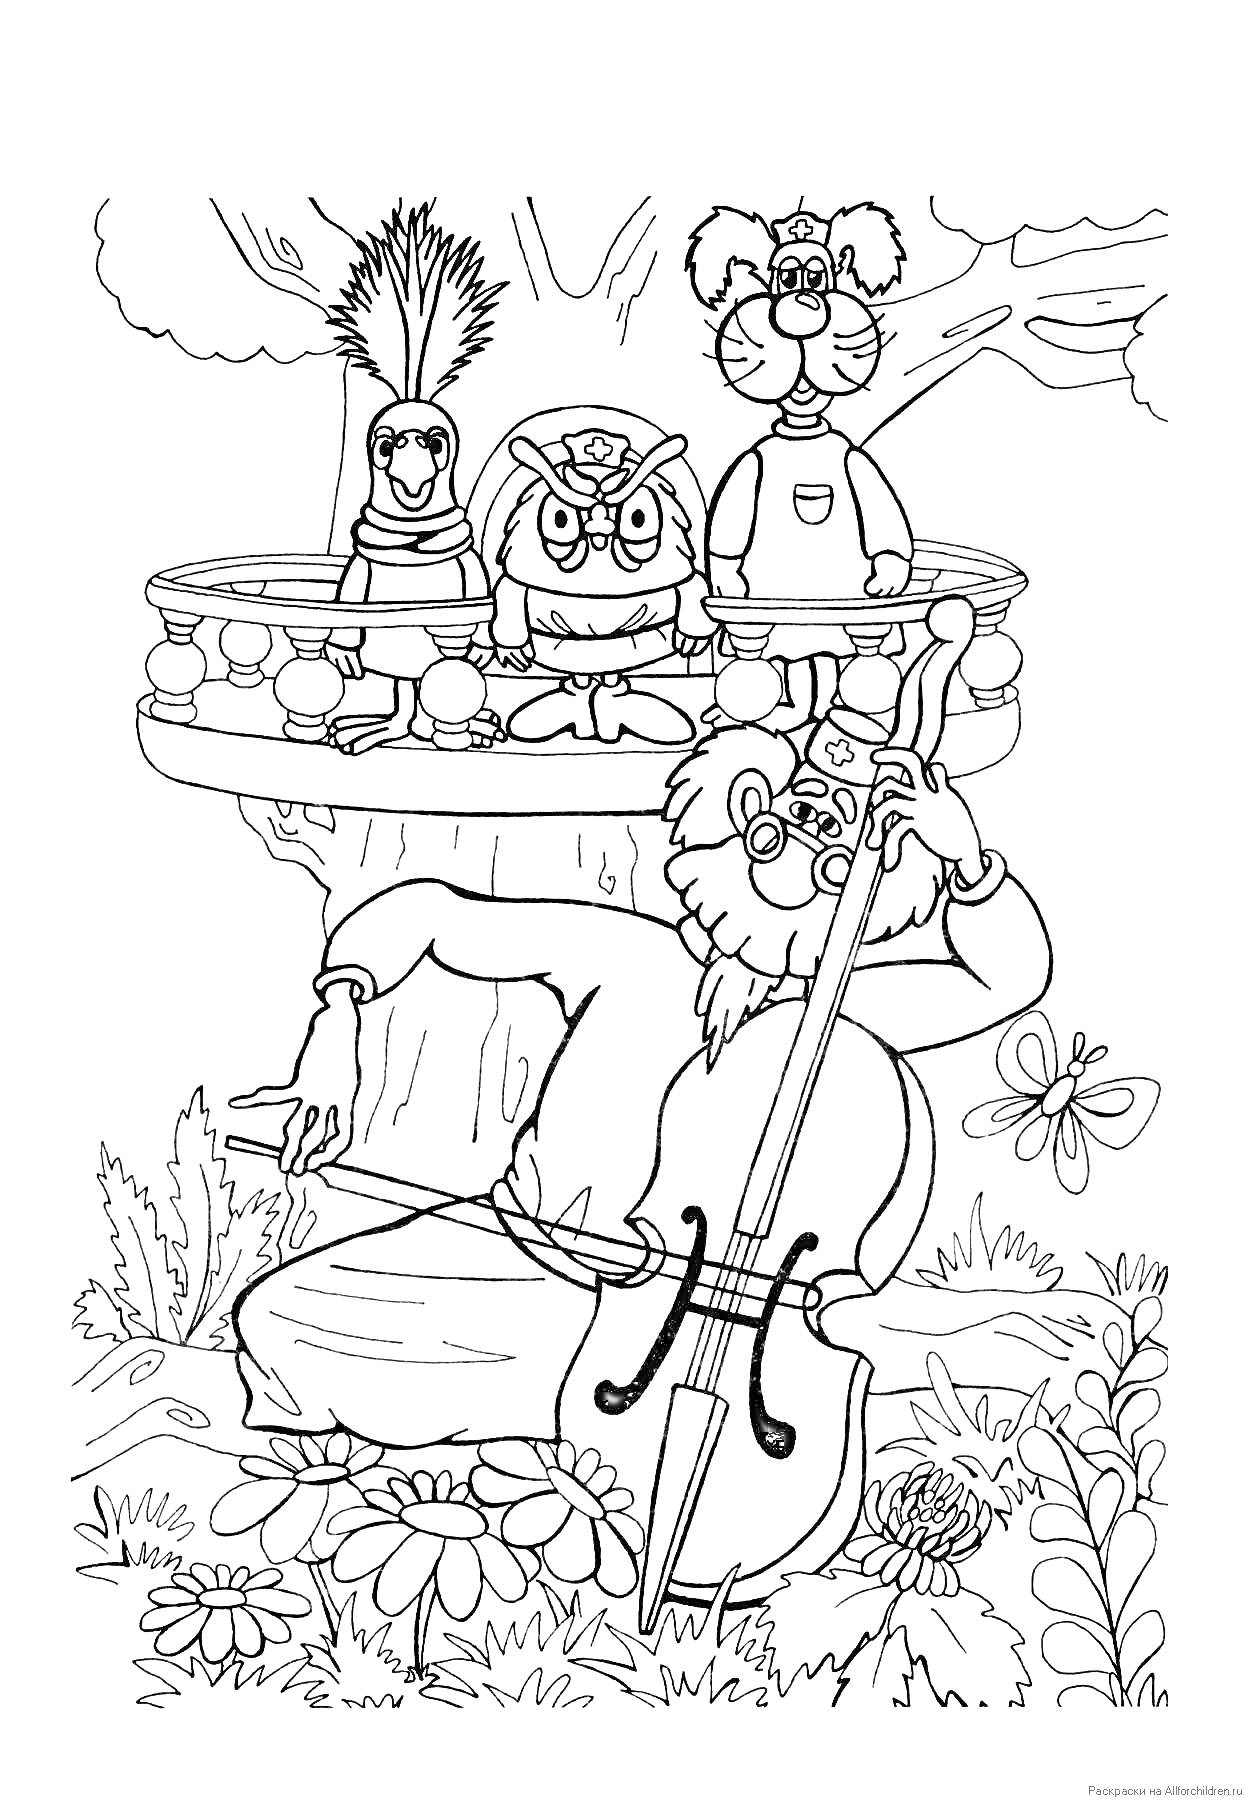 Раскраска Доктор Айболит играет на виолончели, сова, попугай и обезьяна на балконе